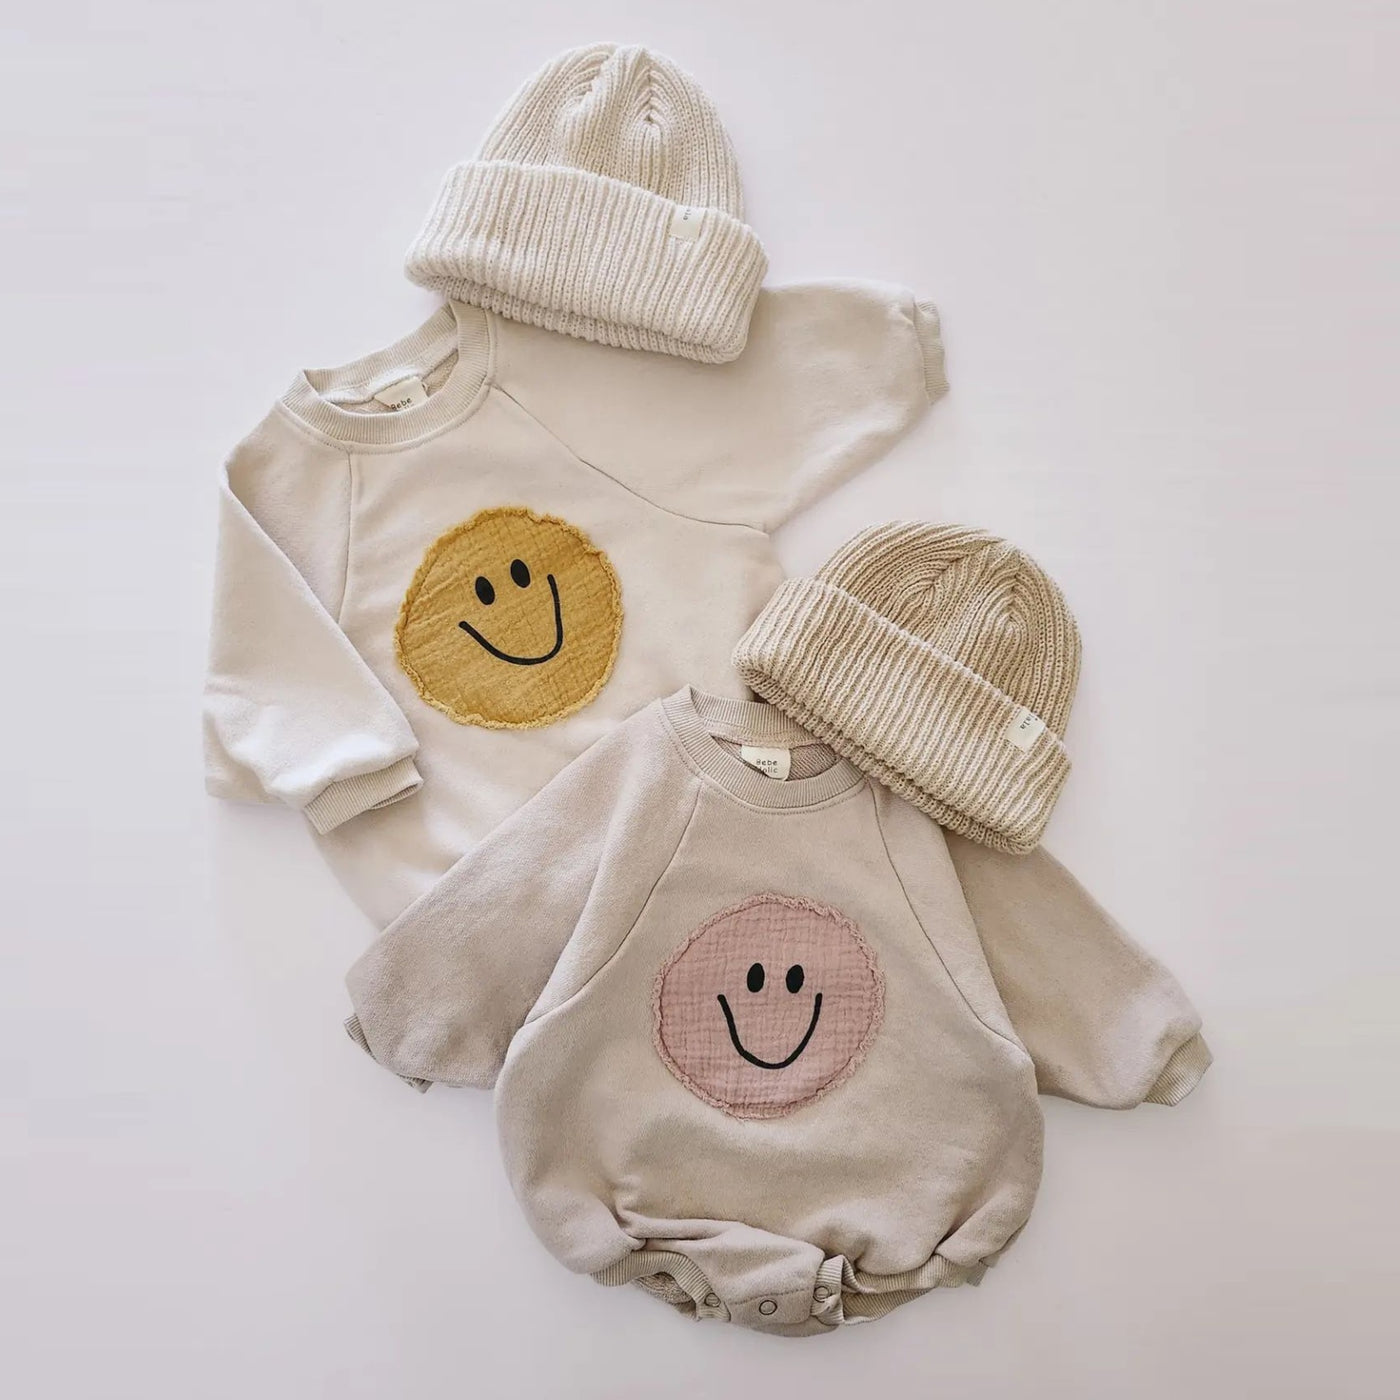 Smiley Face Sweatshirt Baby Romper - Hamod Baby